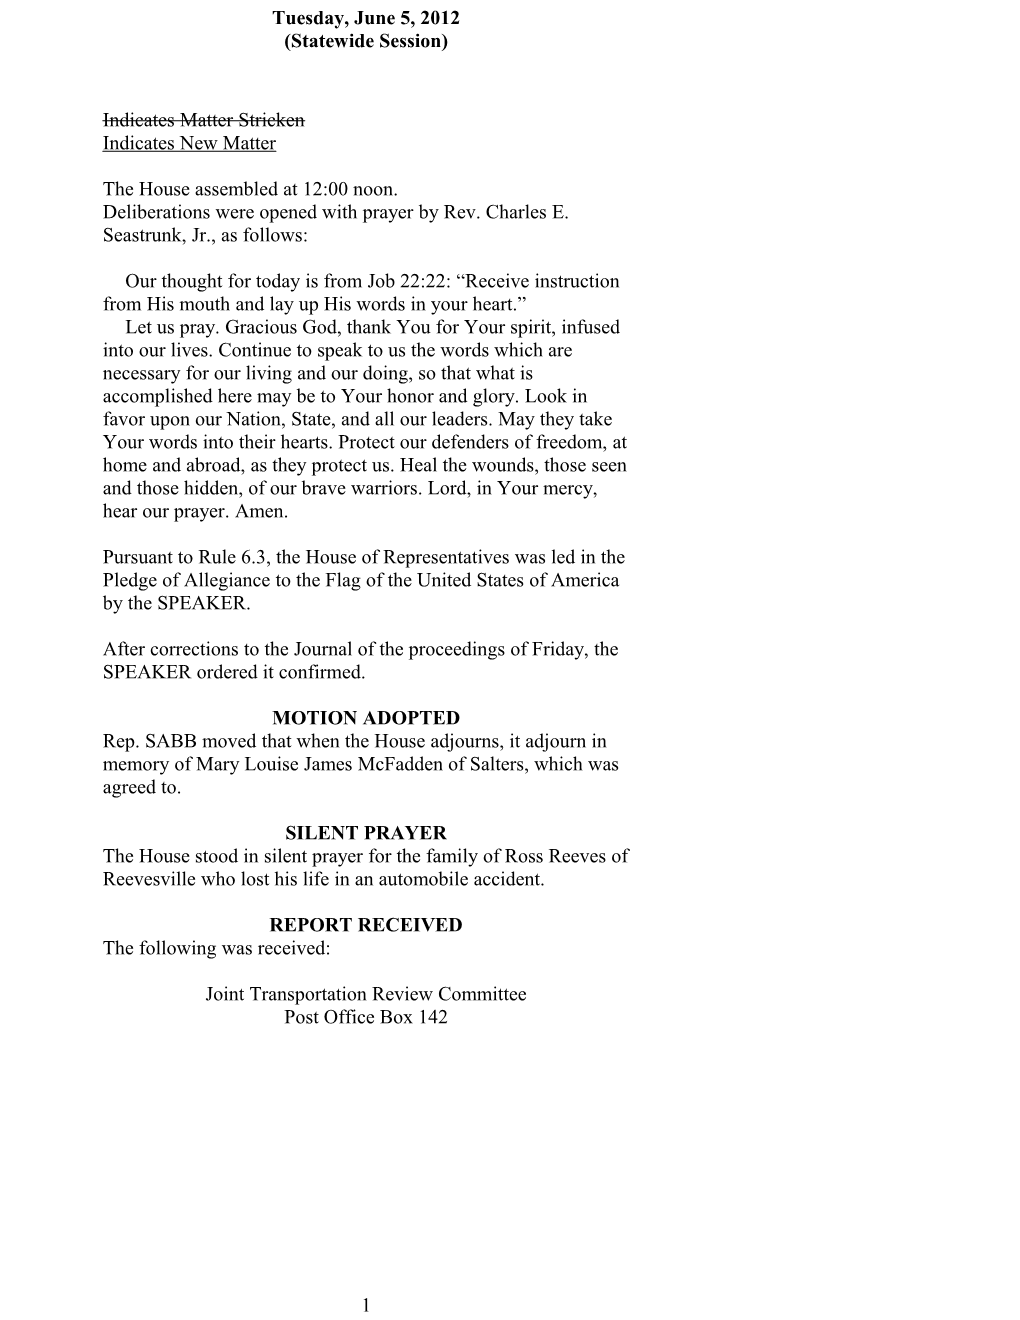 House Journal for June 5, 2012 - South Carolina Legislature Online